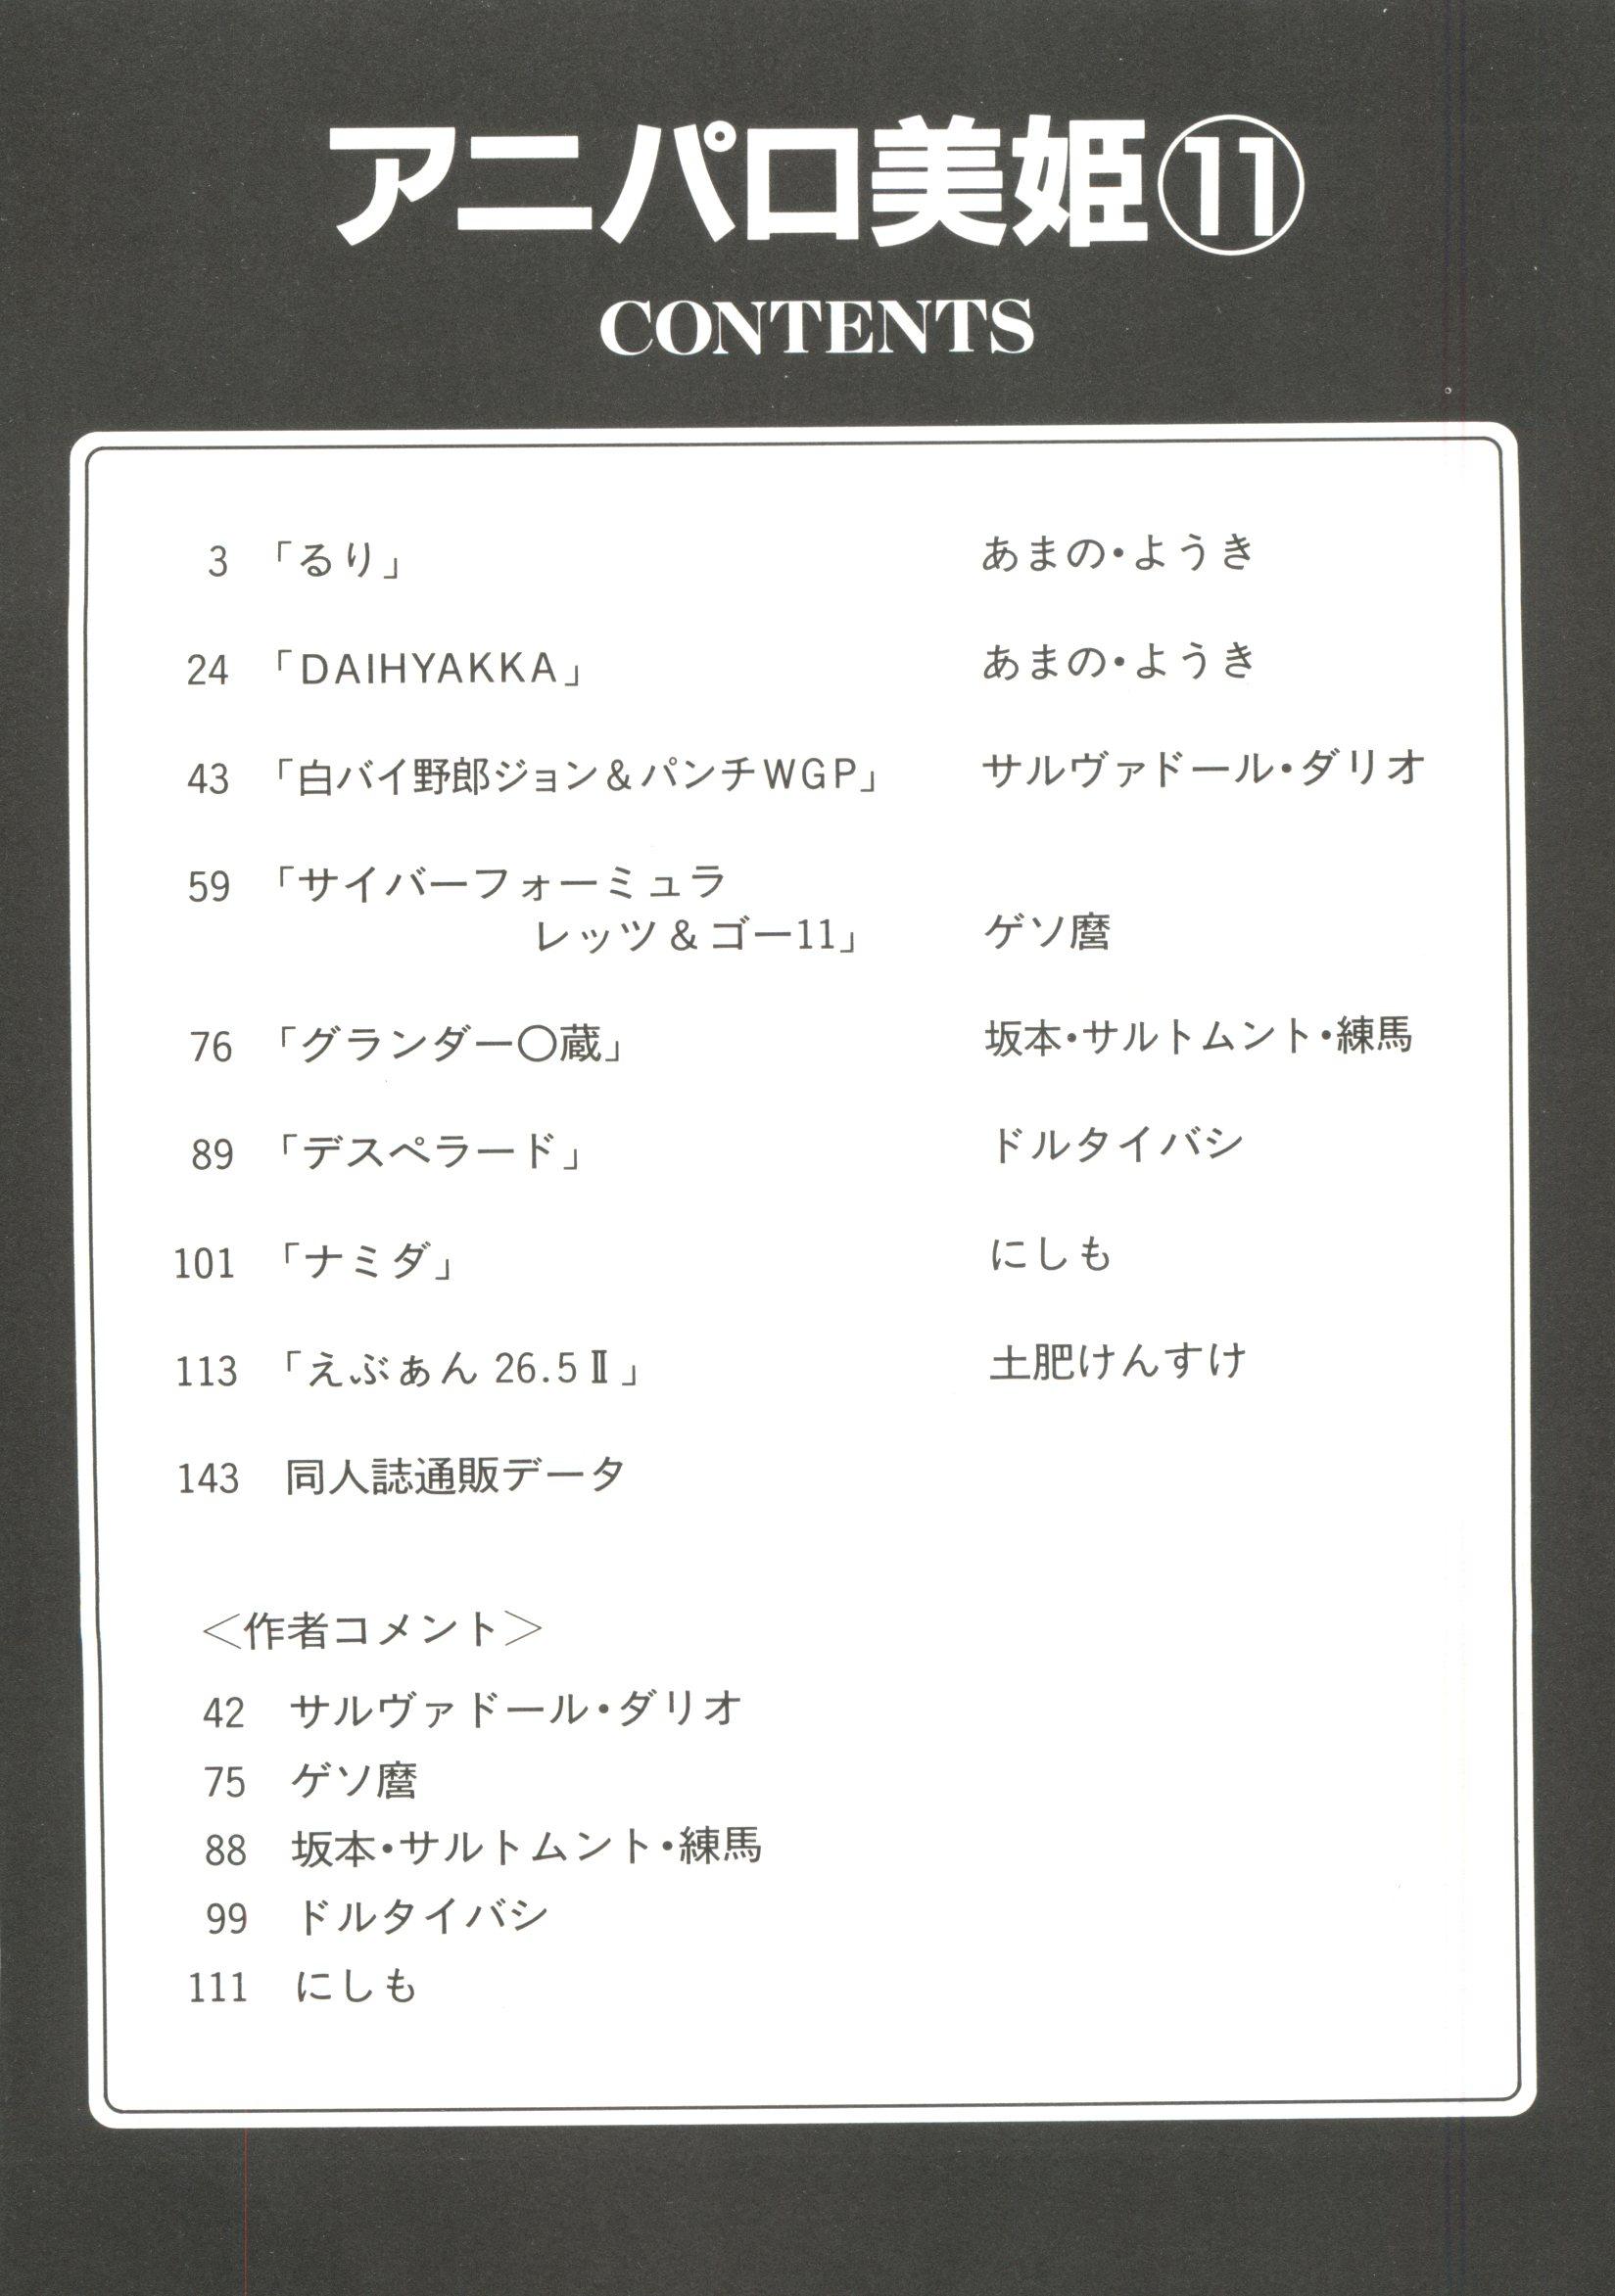 Cameltoe Aniparo Miki 11 - Neon genesis evangelion Martian successor nadesico Bakusou kyoudai lets and go Gundam x Yoga - Page 6